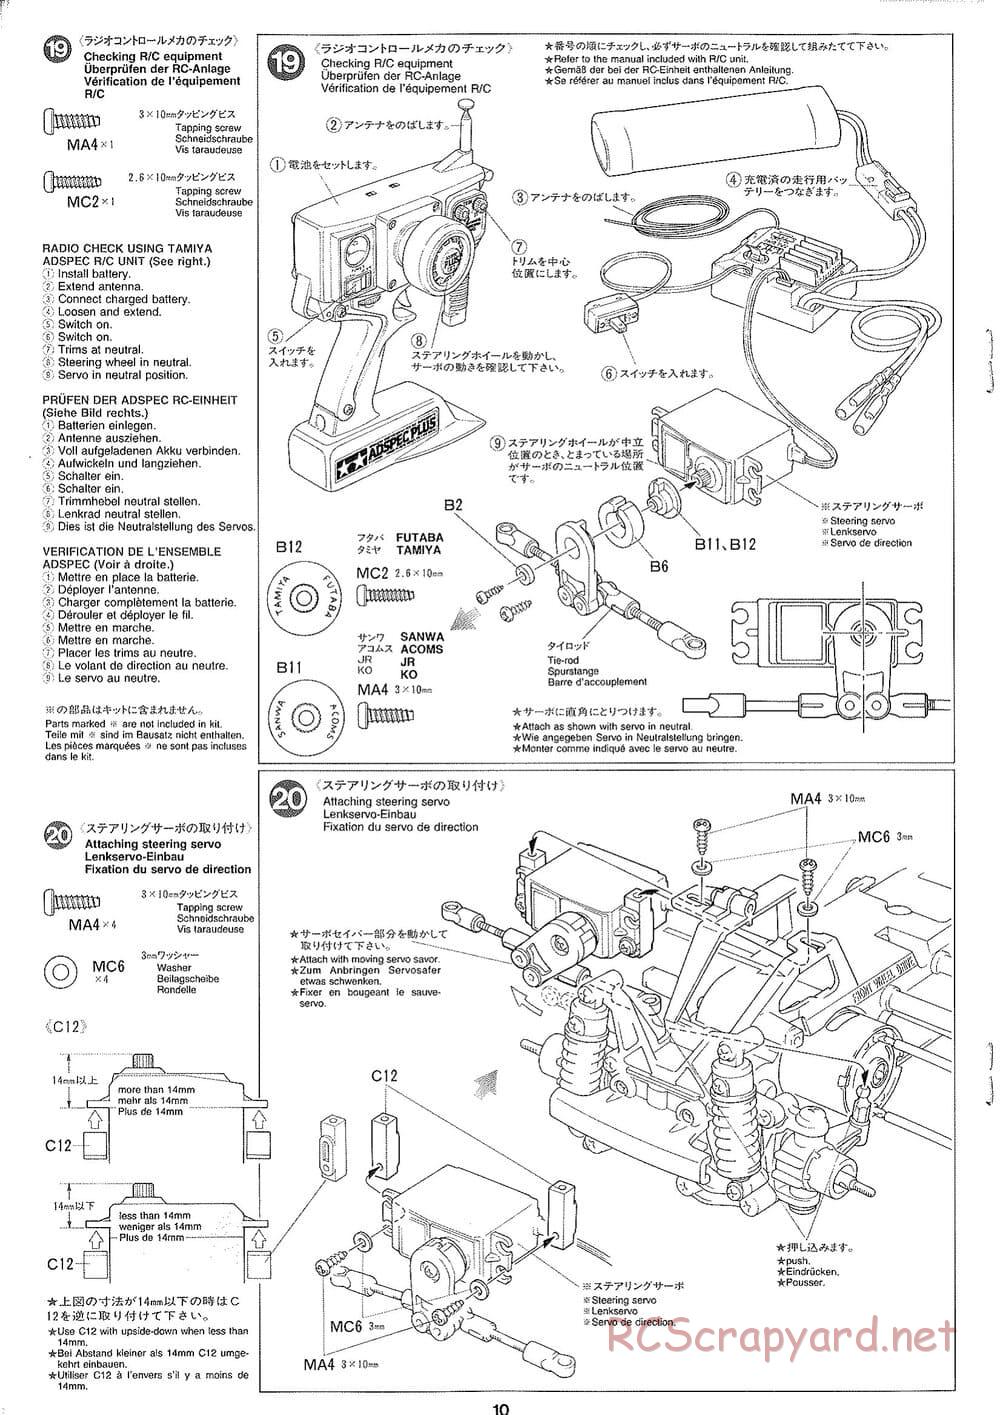 Tamiya - Rover Mini Cooper Racing - M03 Chassis - Manual - Page 10